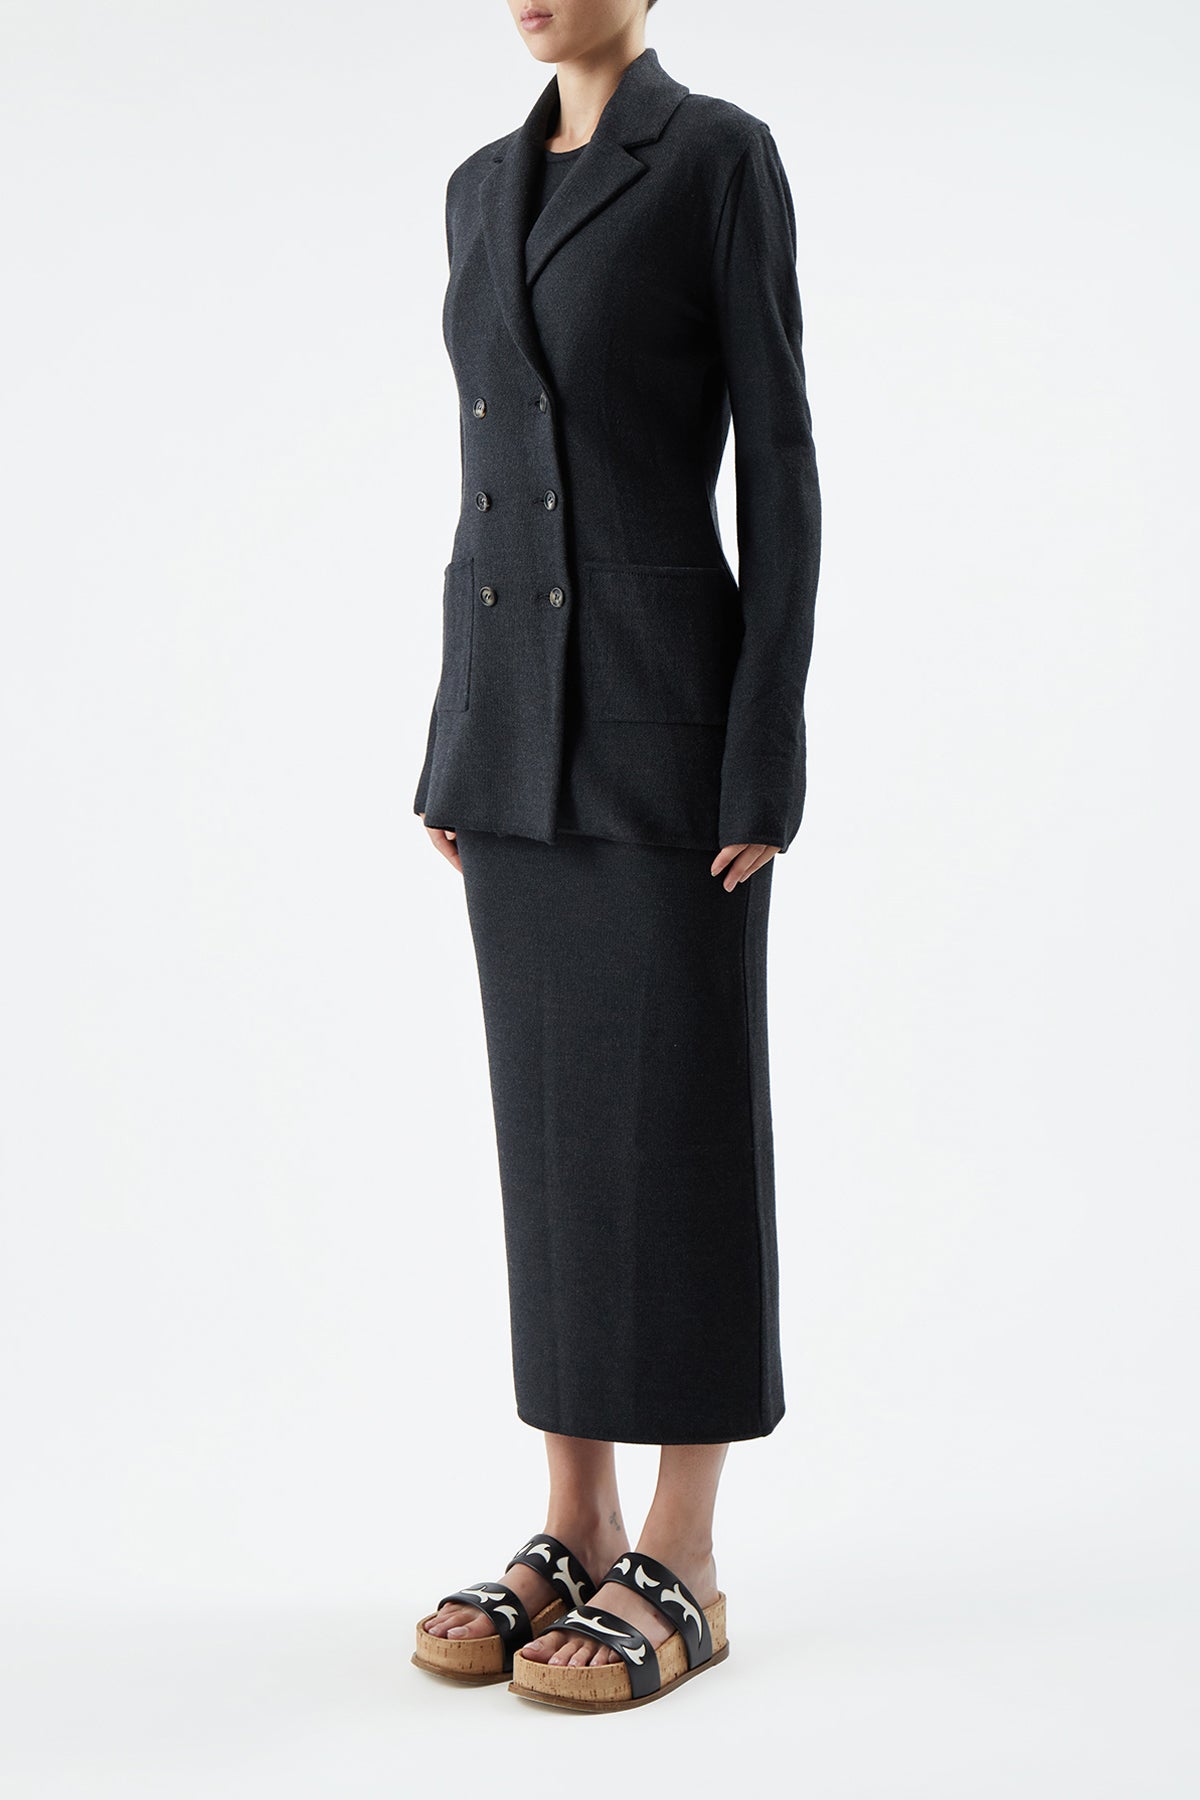 Loretta Jacket in Charcoal Merino Wool